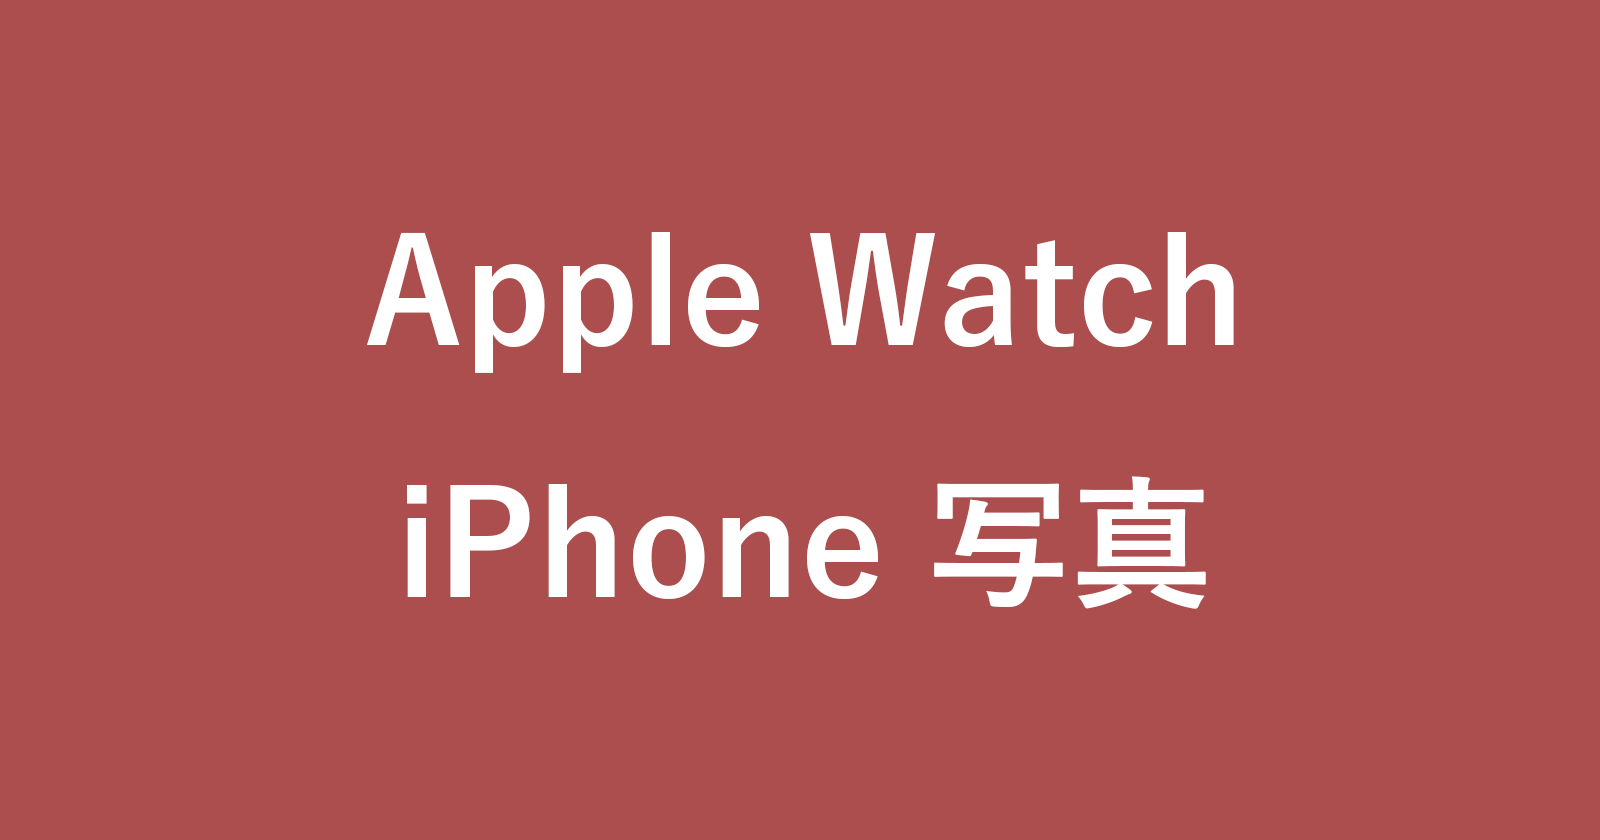 apple watch iphone photo sync